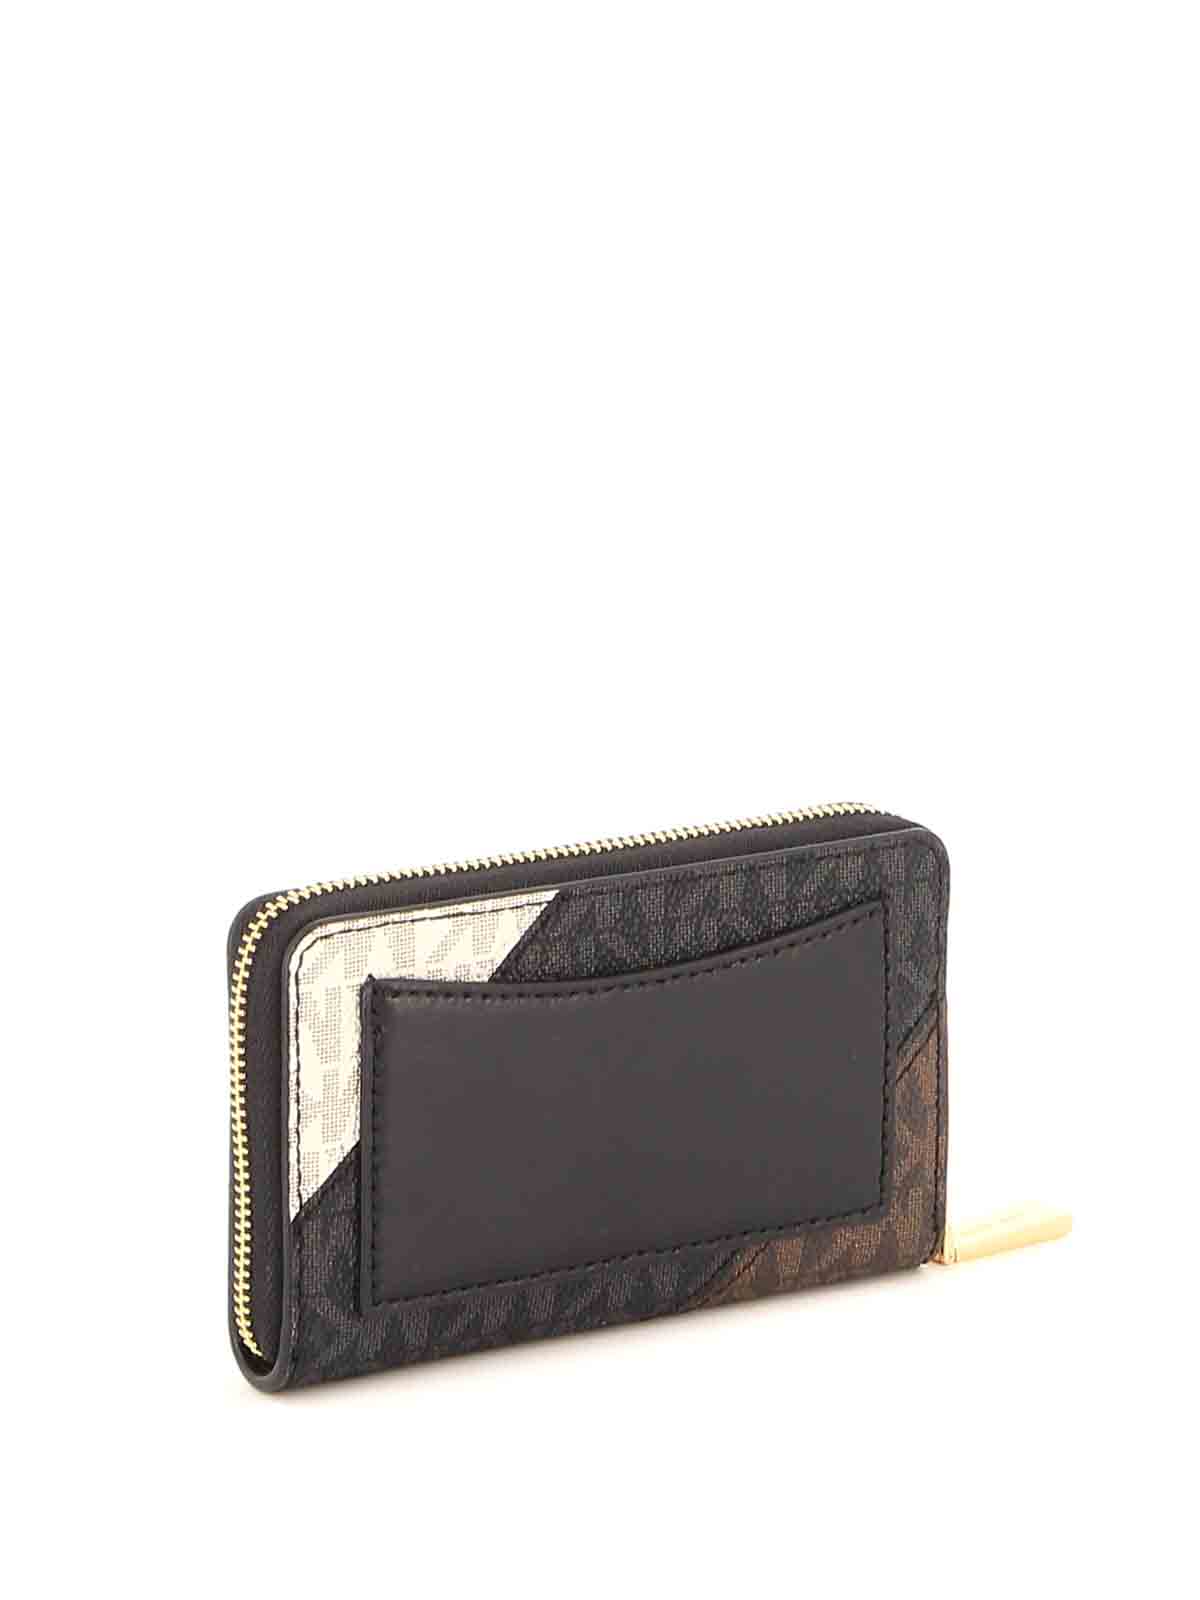 Wallets & purses Michael Kors - Jet Set small zip around wallet -  34S0GJ6D0Y212